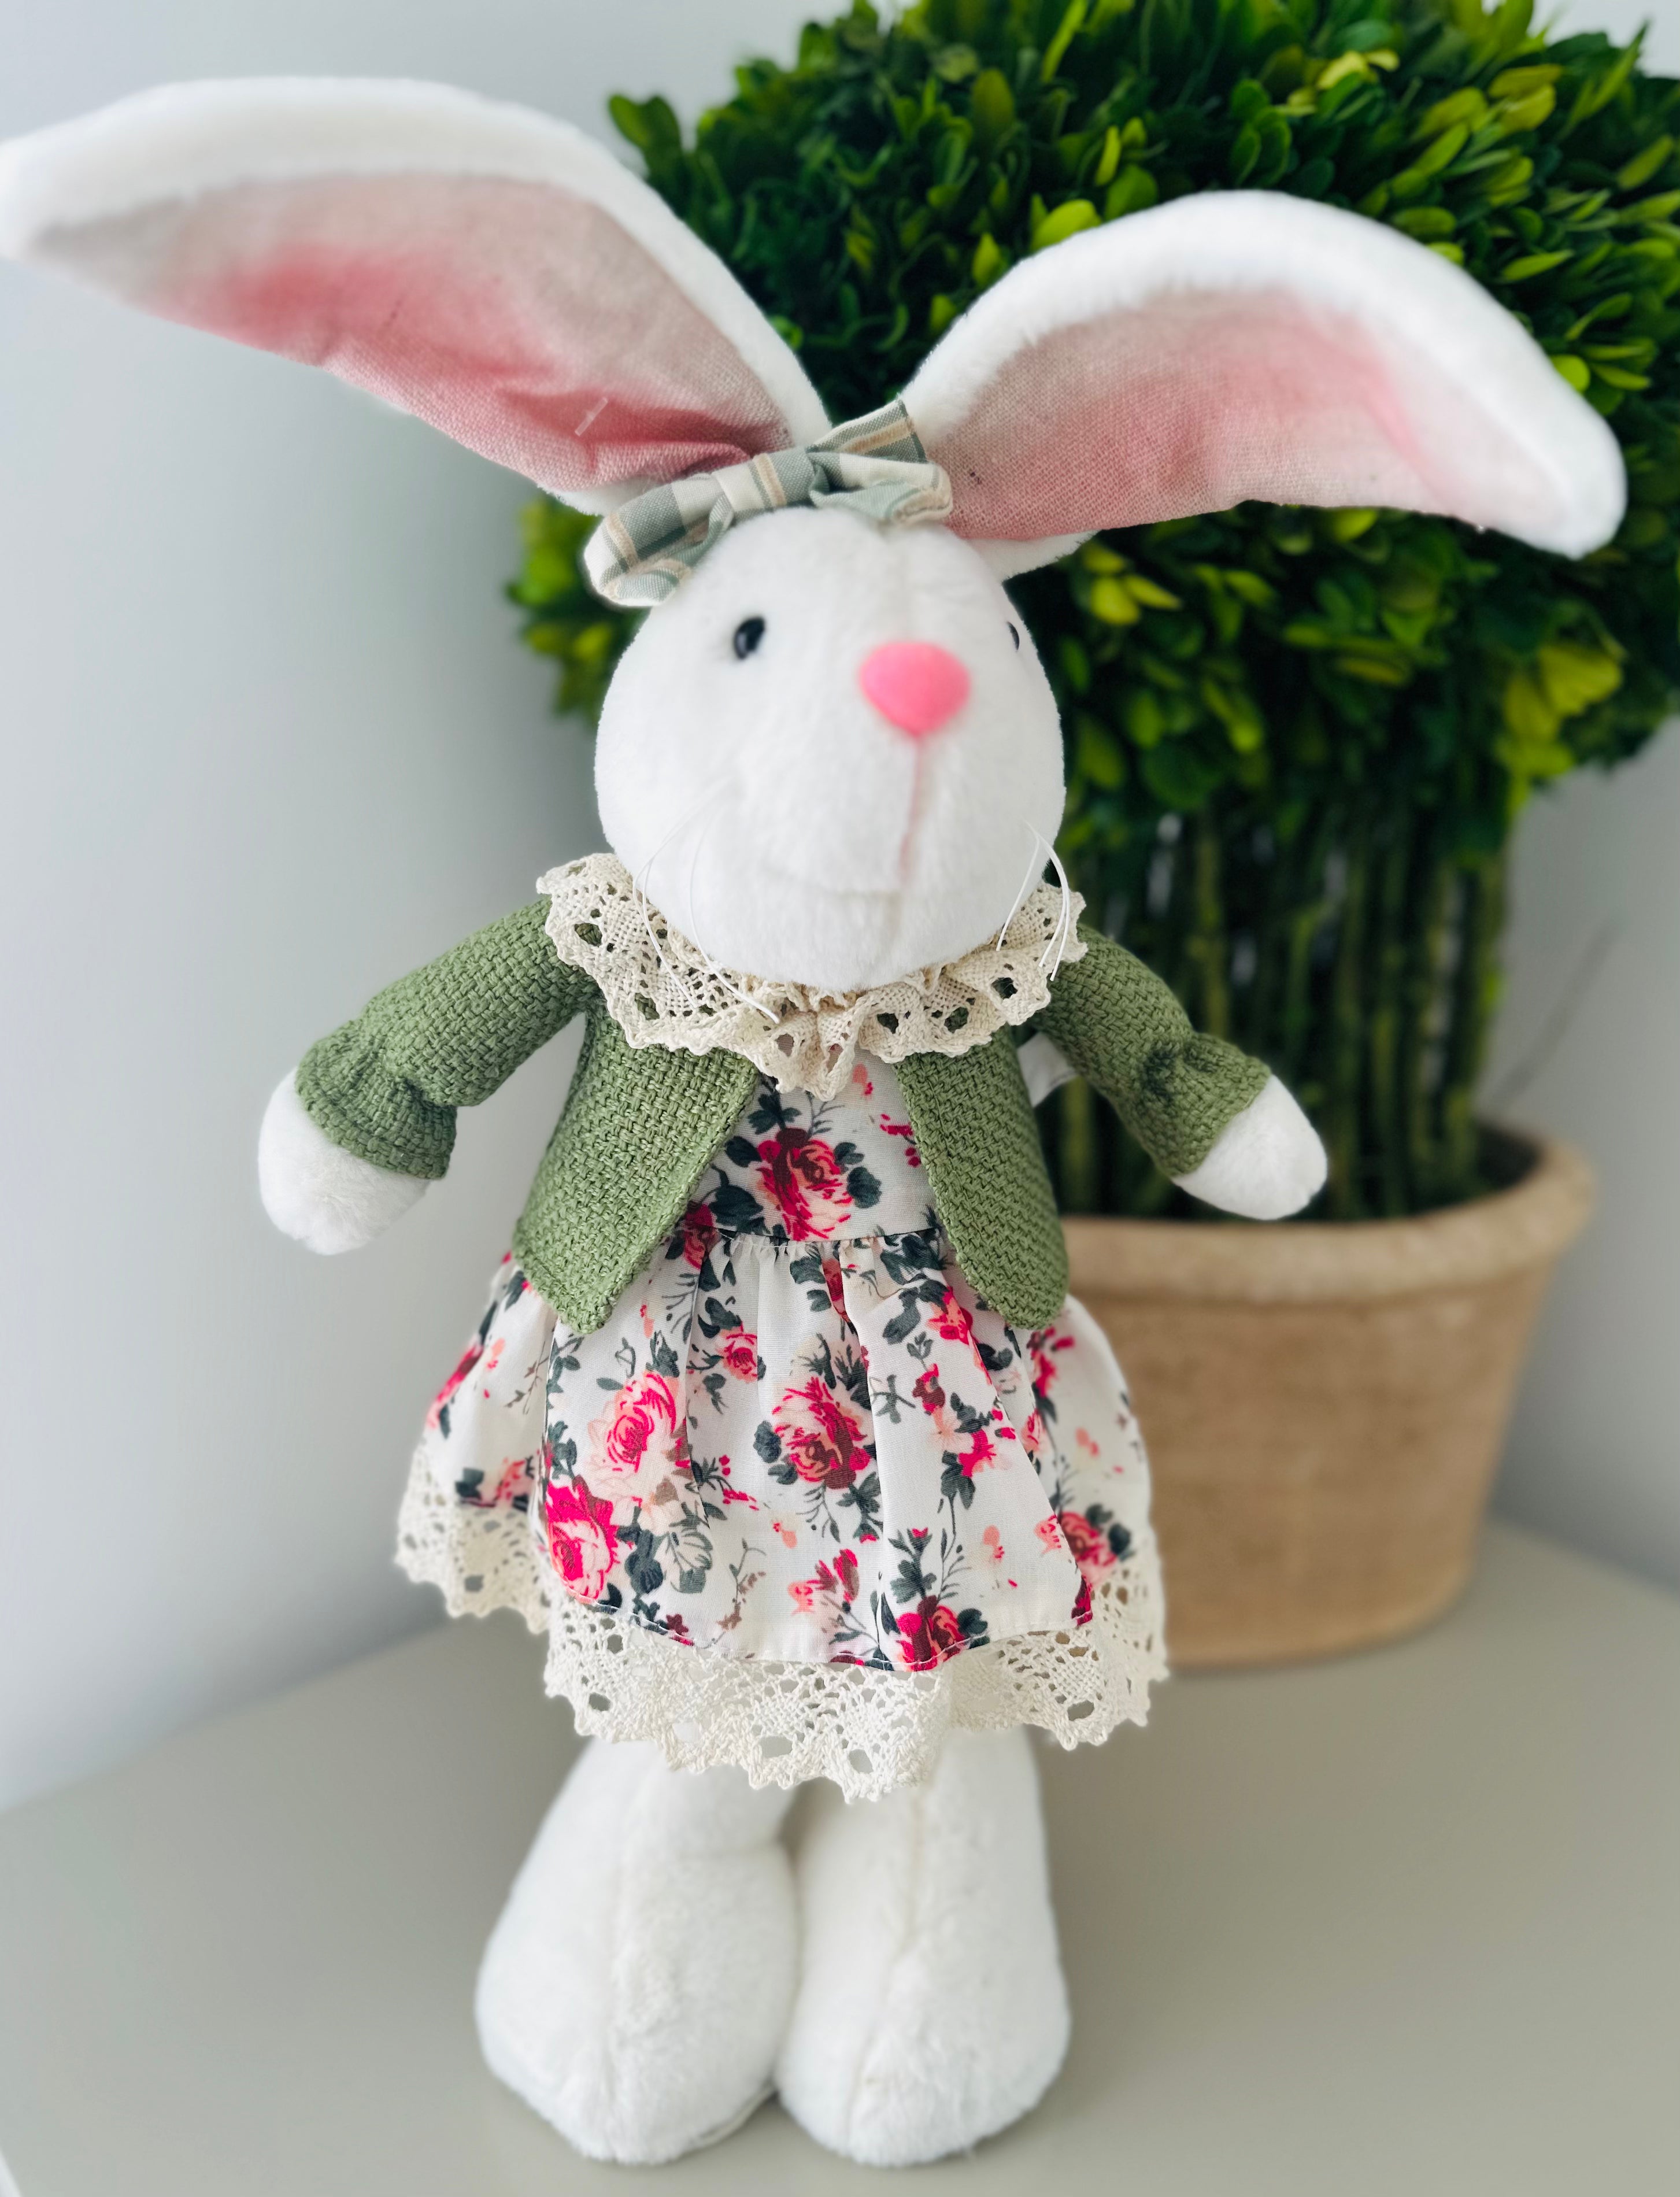 Mrs. Easter Plush Bunny